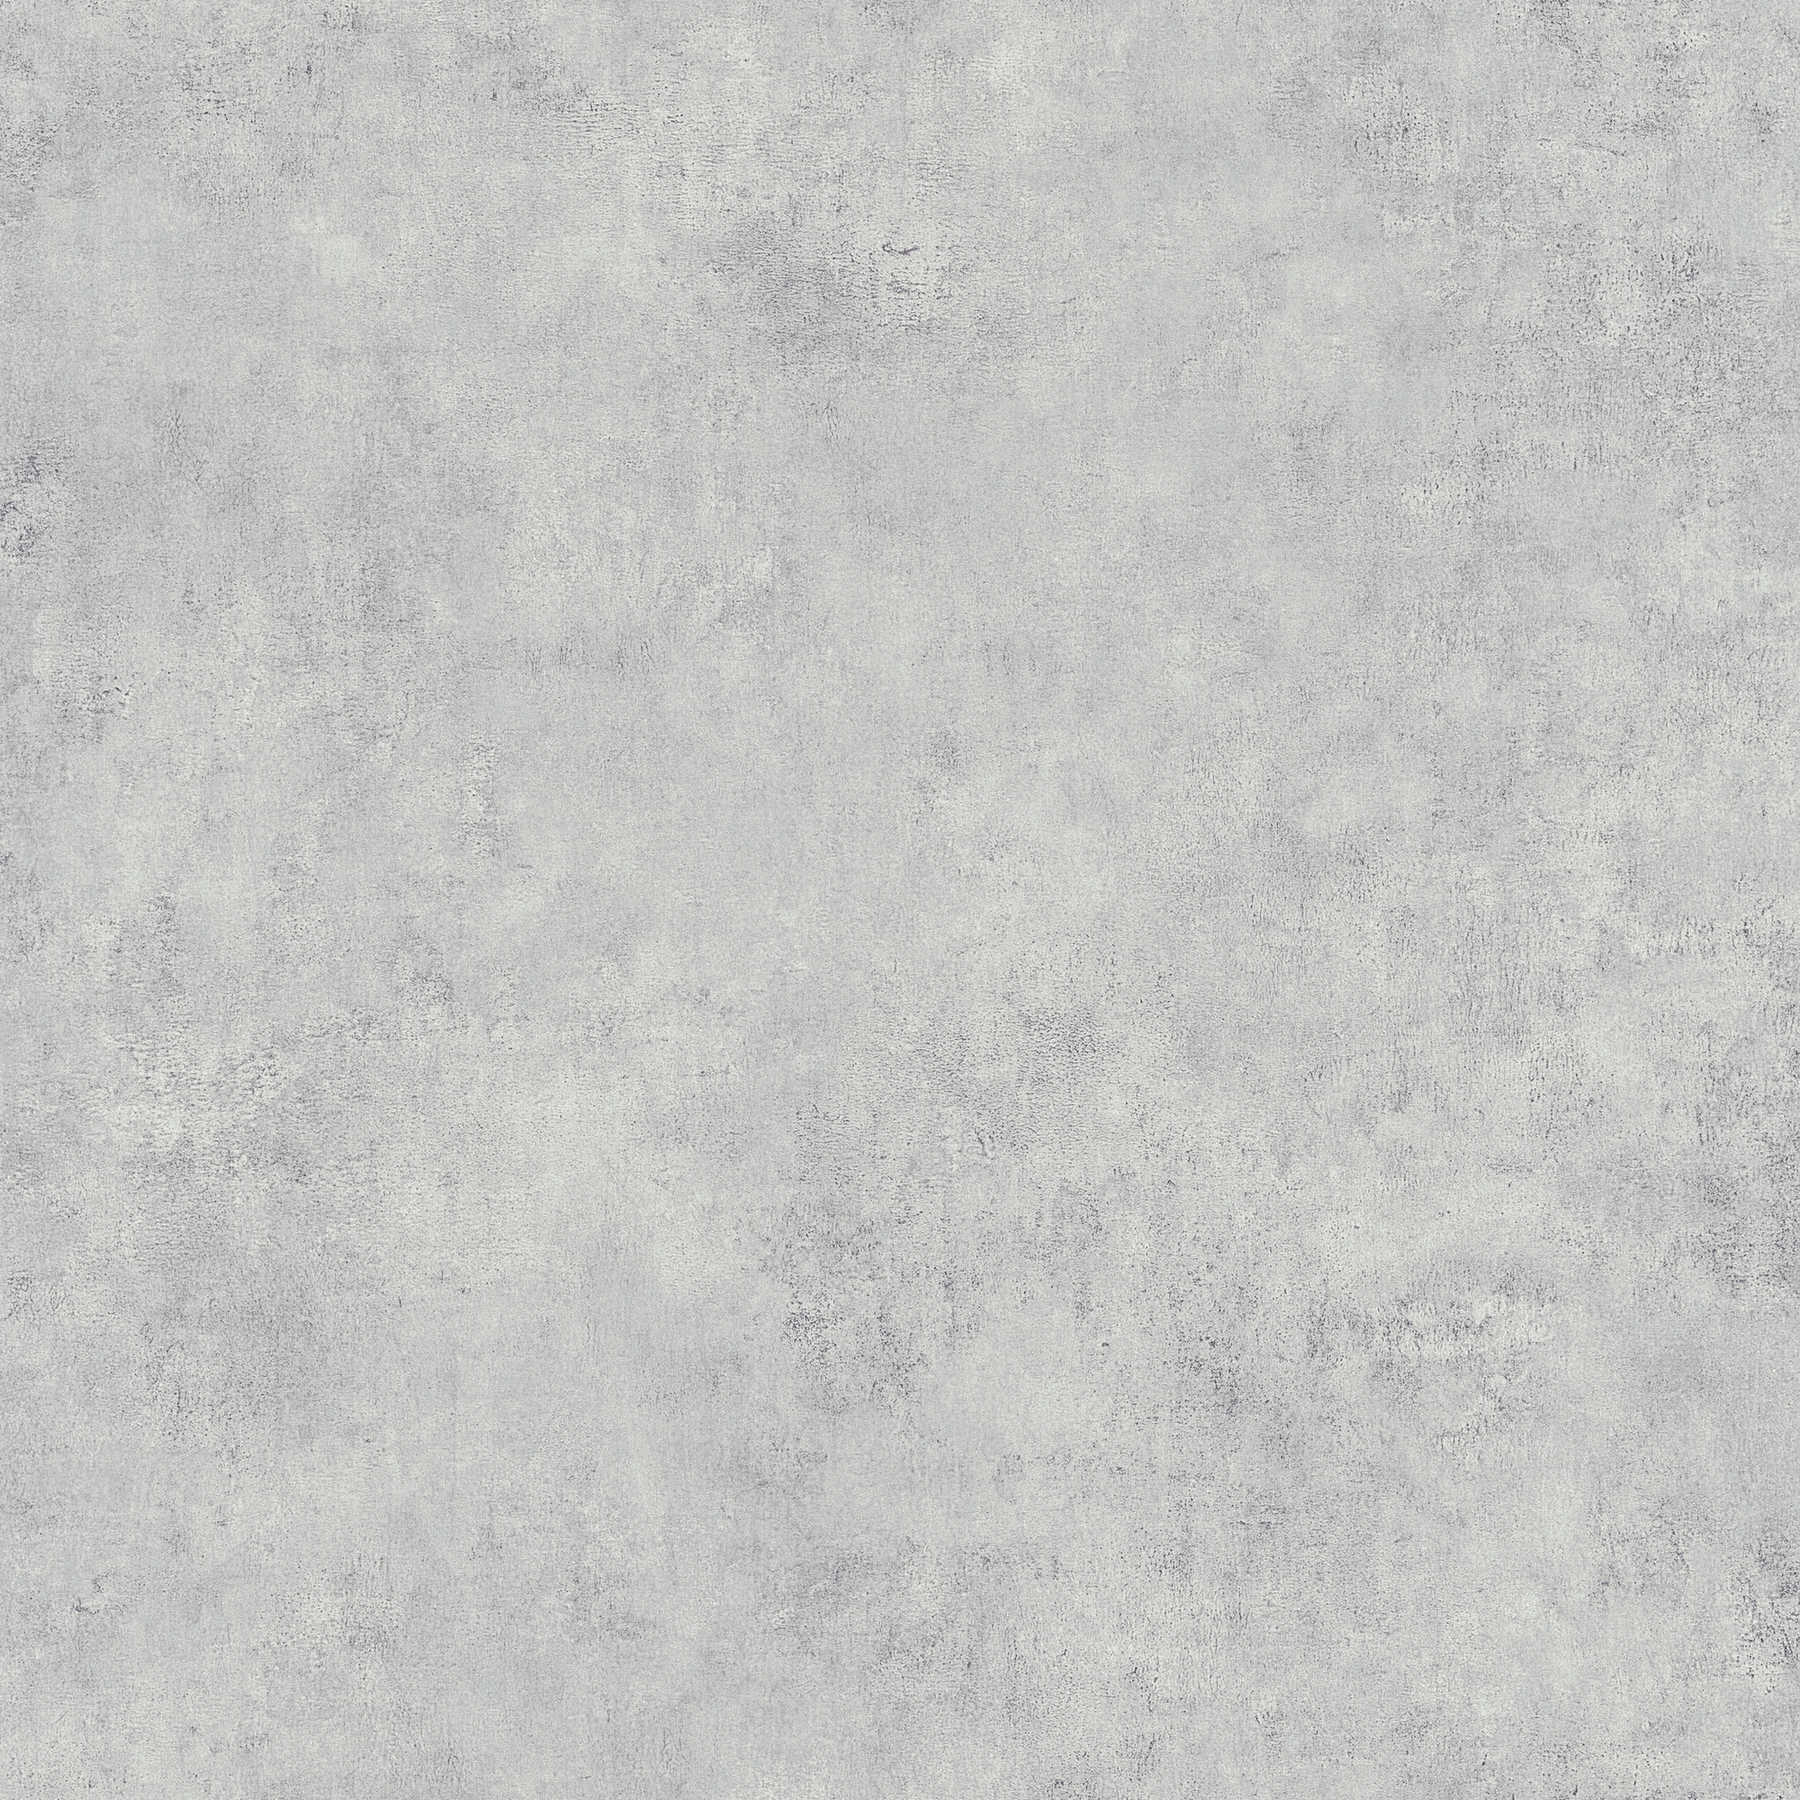 Plaster optics wallpaper mottled grey with textured pattern
